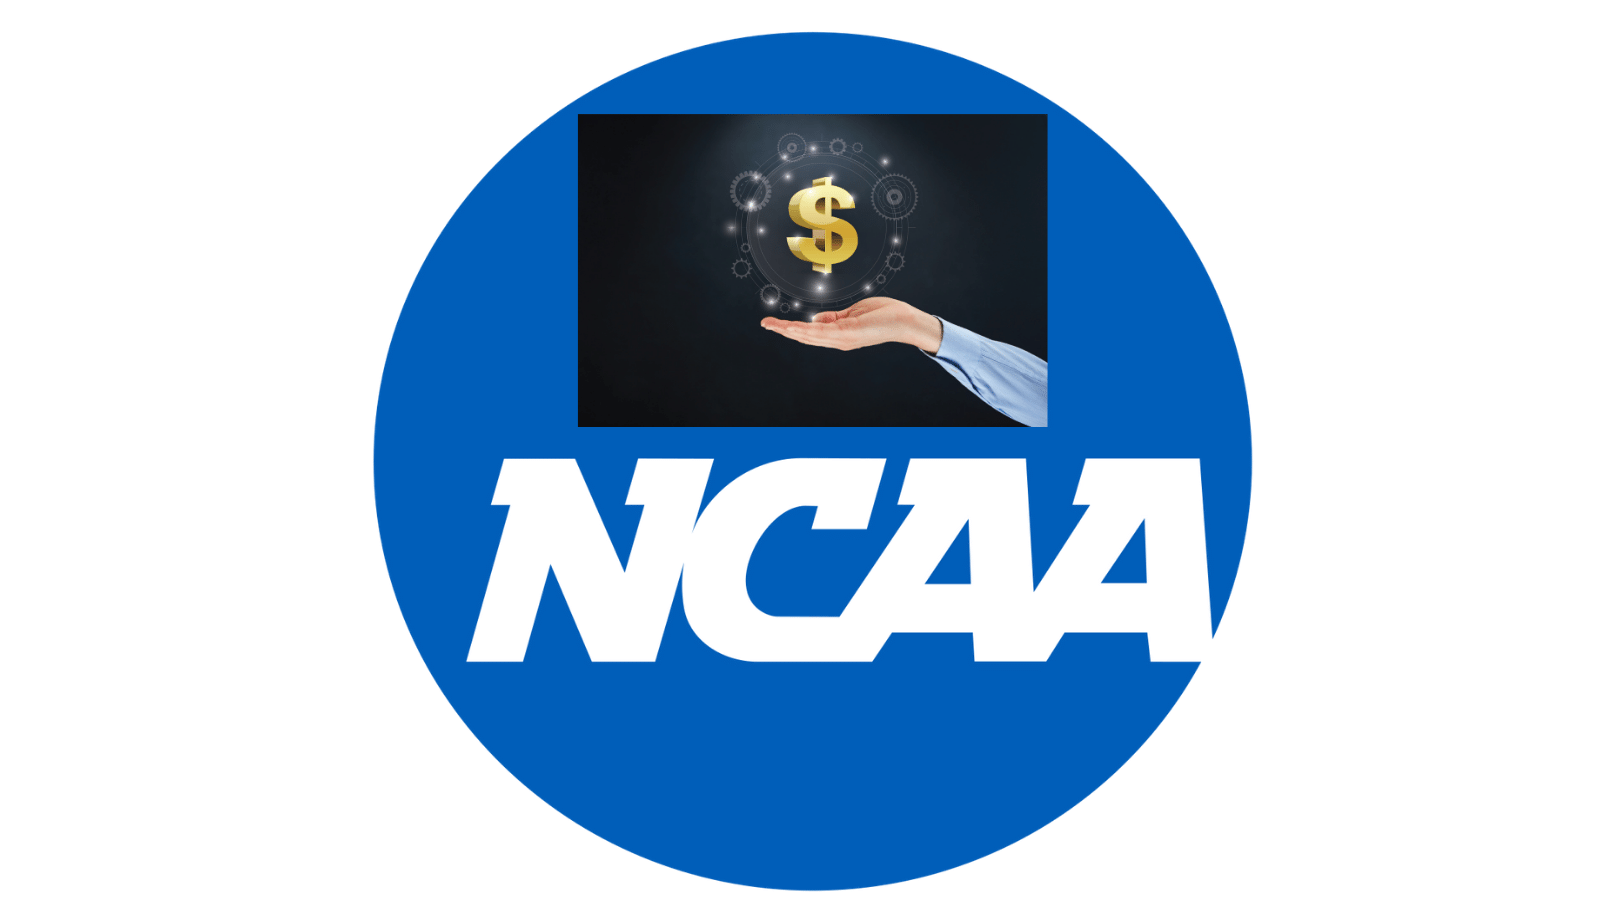 NCAA logo with dollar sign